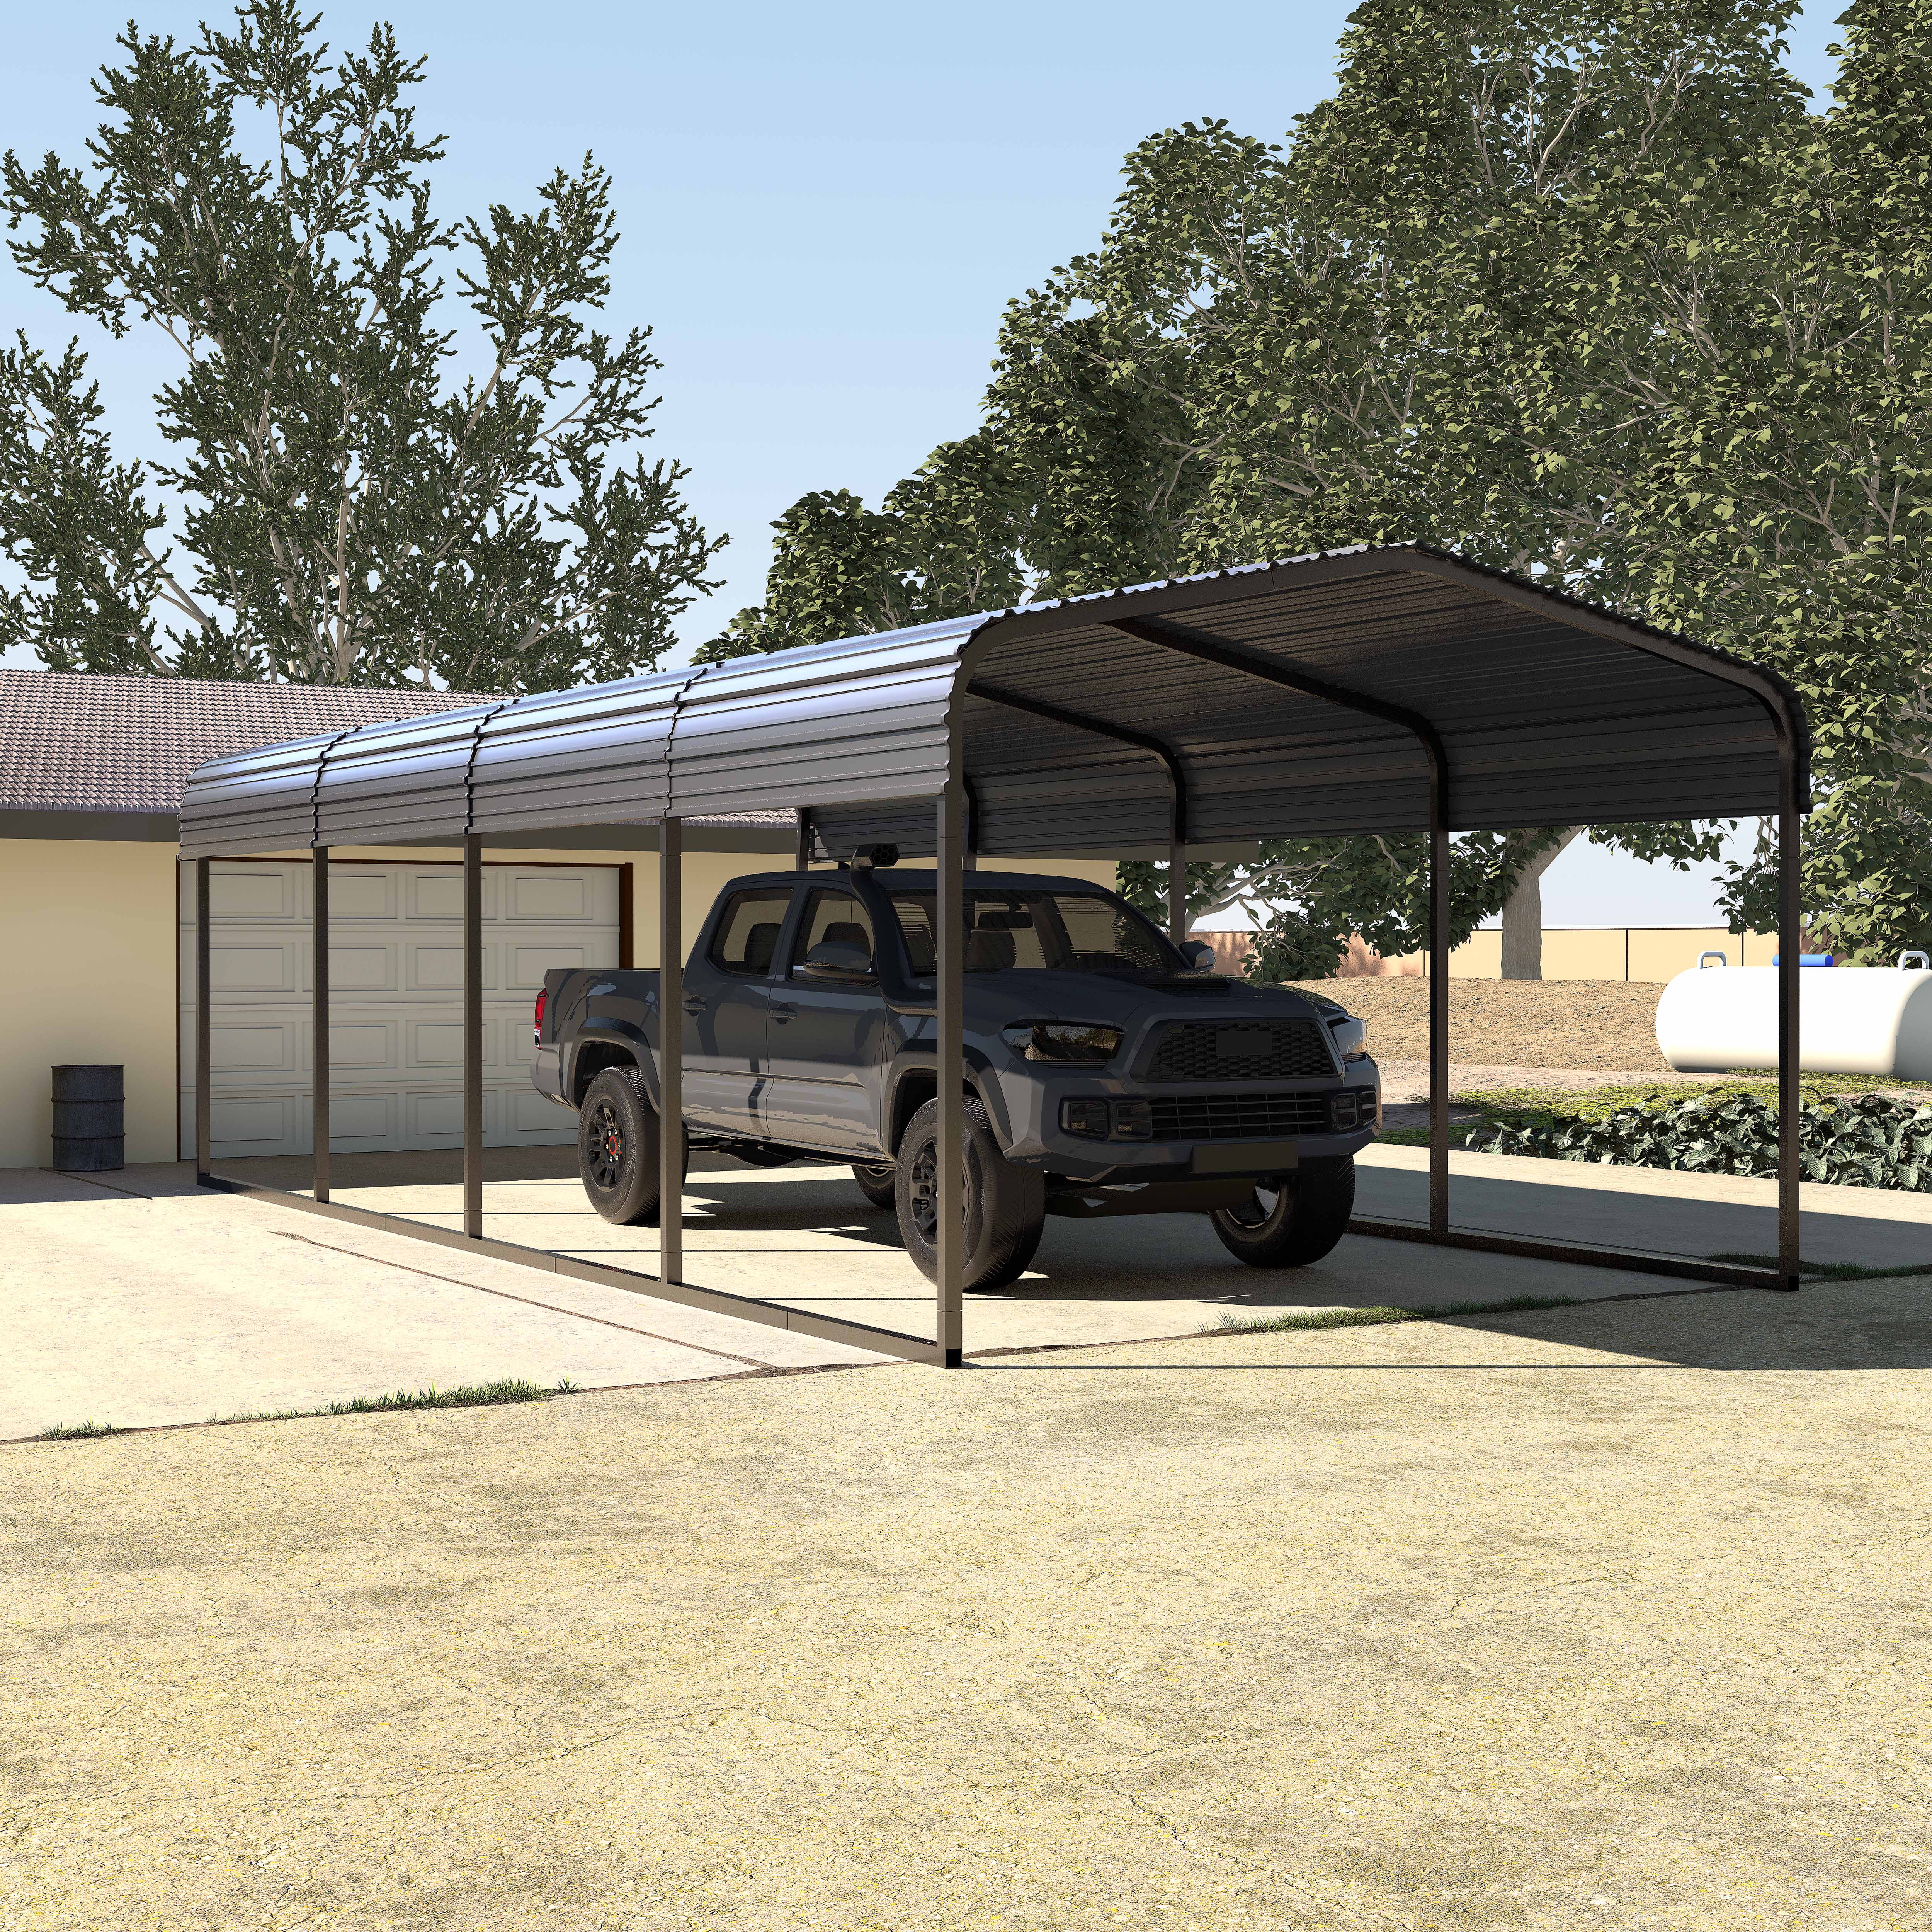 VEIKOUS 20' x 12' Outdoor Carport, Galvanized Metal Heavy Duty Garage Car Storage Shelter, Grey - image 2 of 17